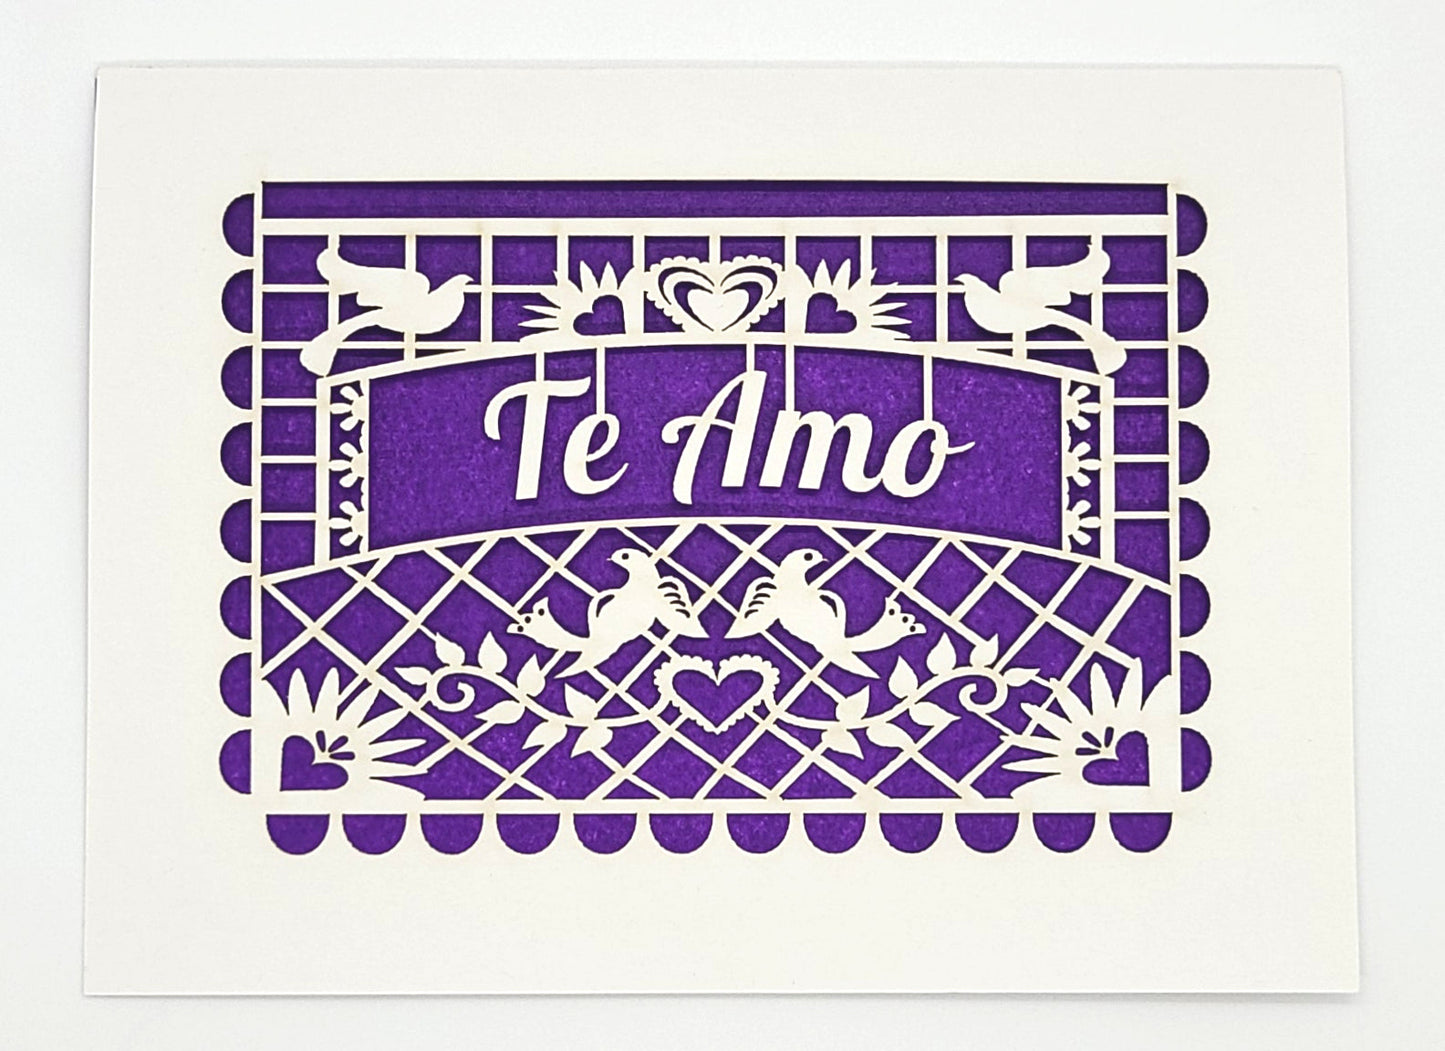 Papel Picado Greeting Card: Te Amo